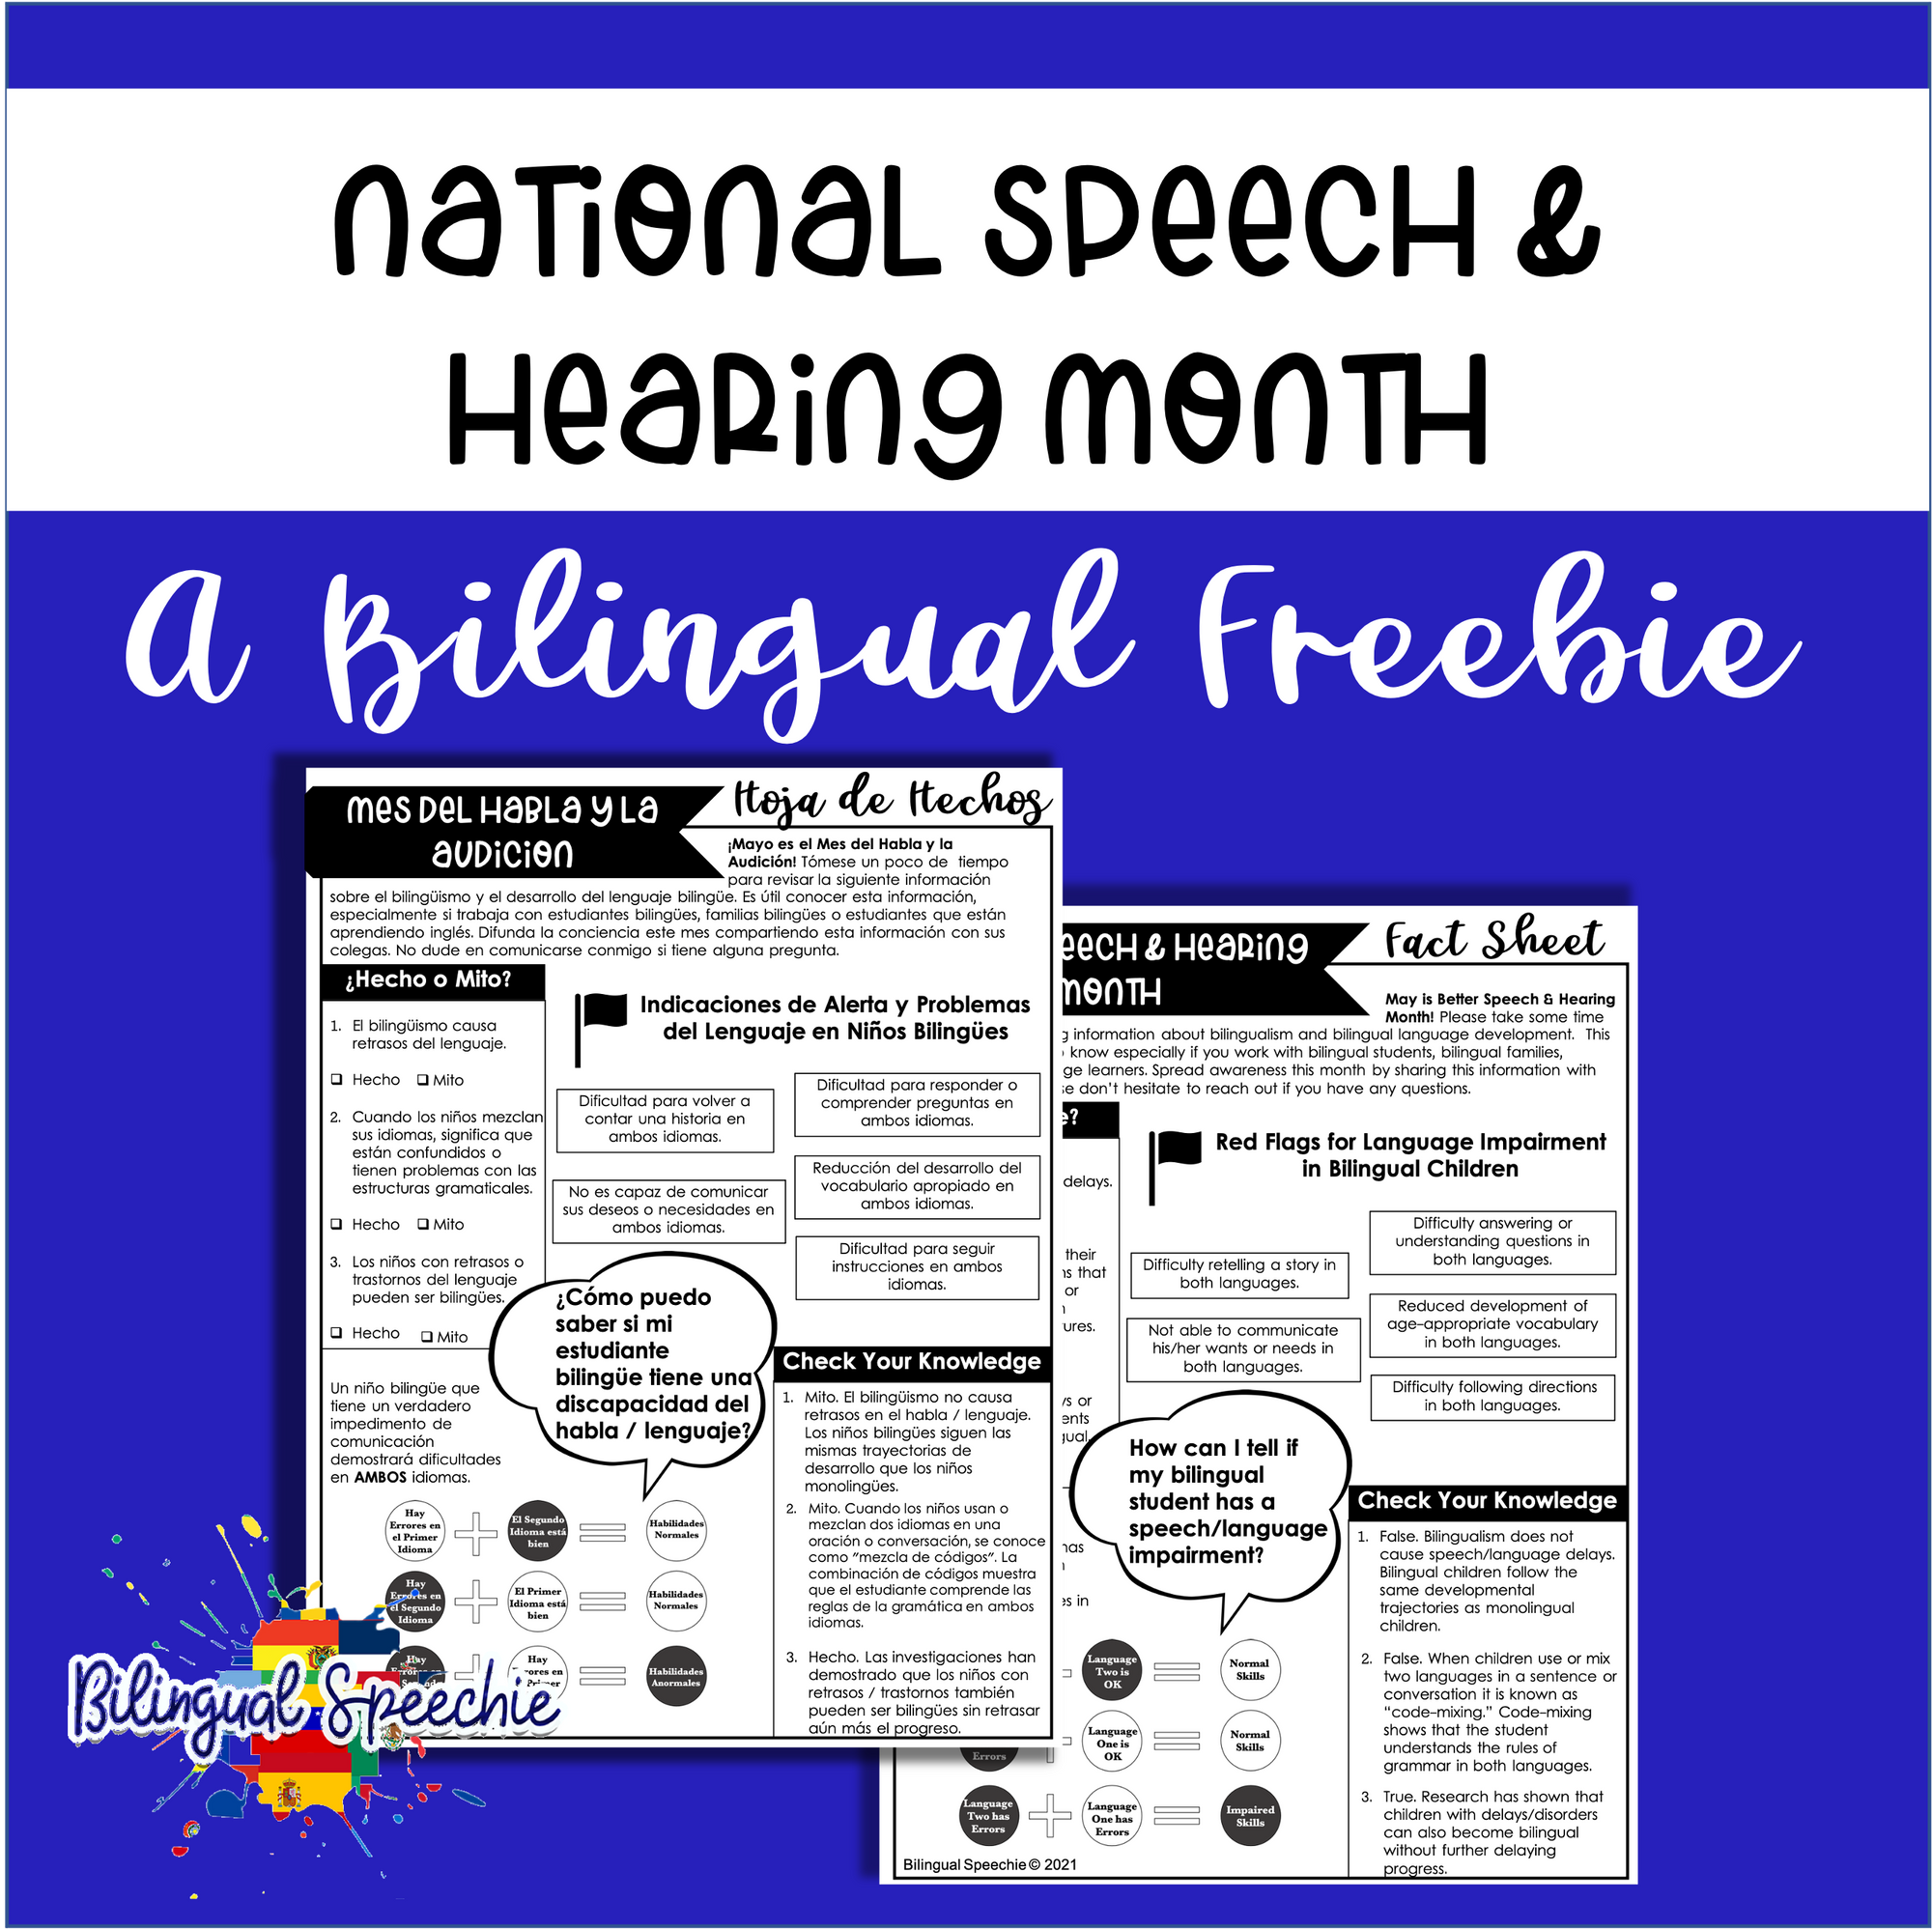 National Speech & Hearing Month | Freebie on Bilingualism